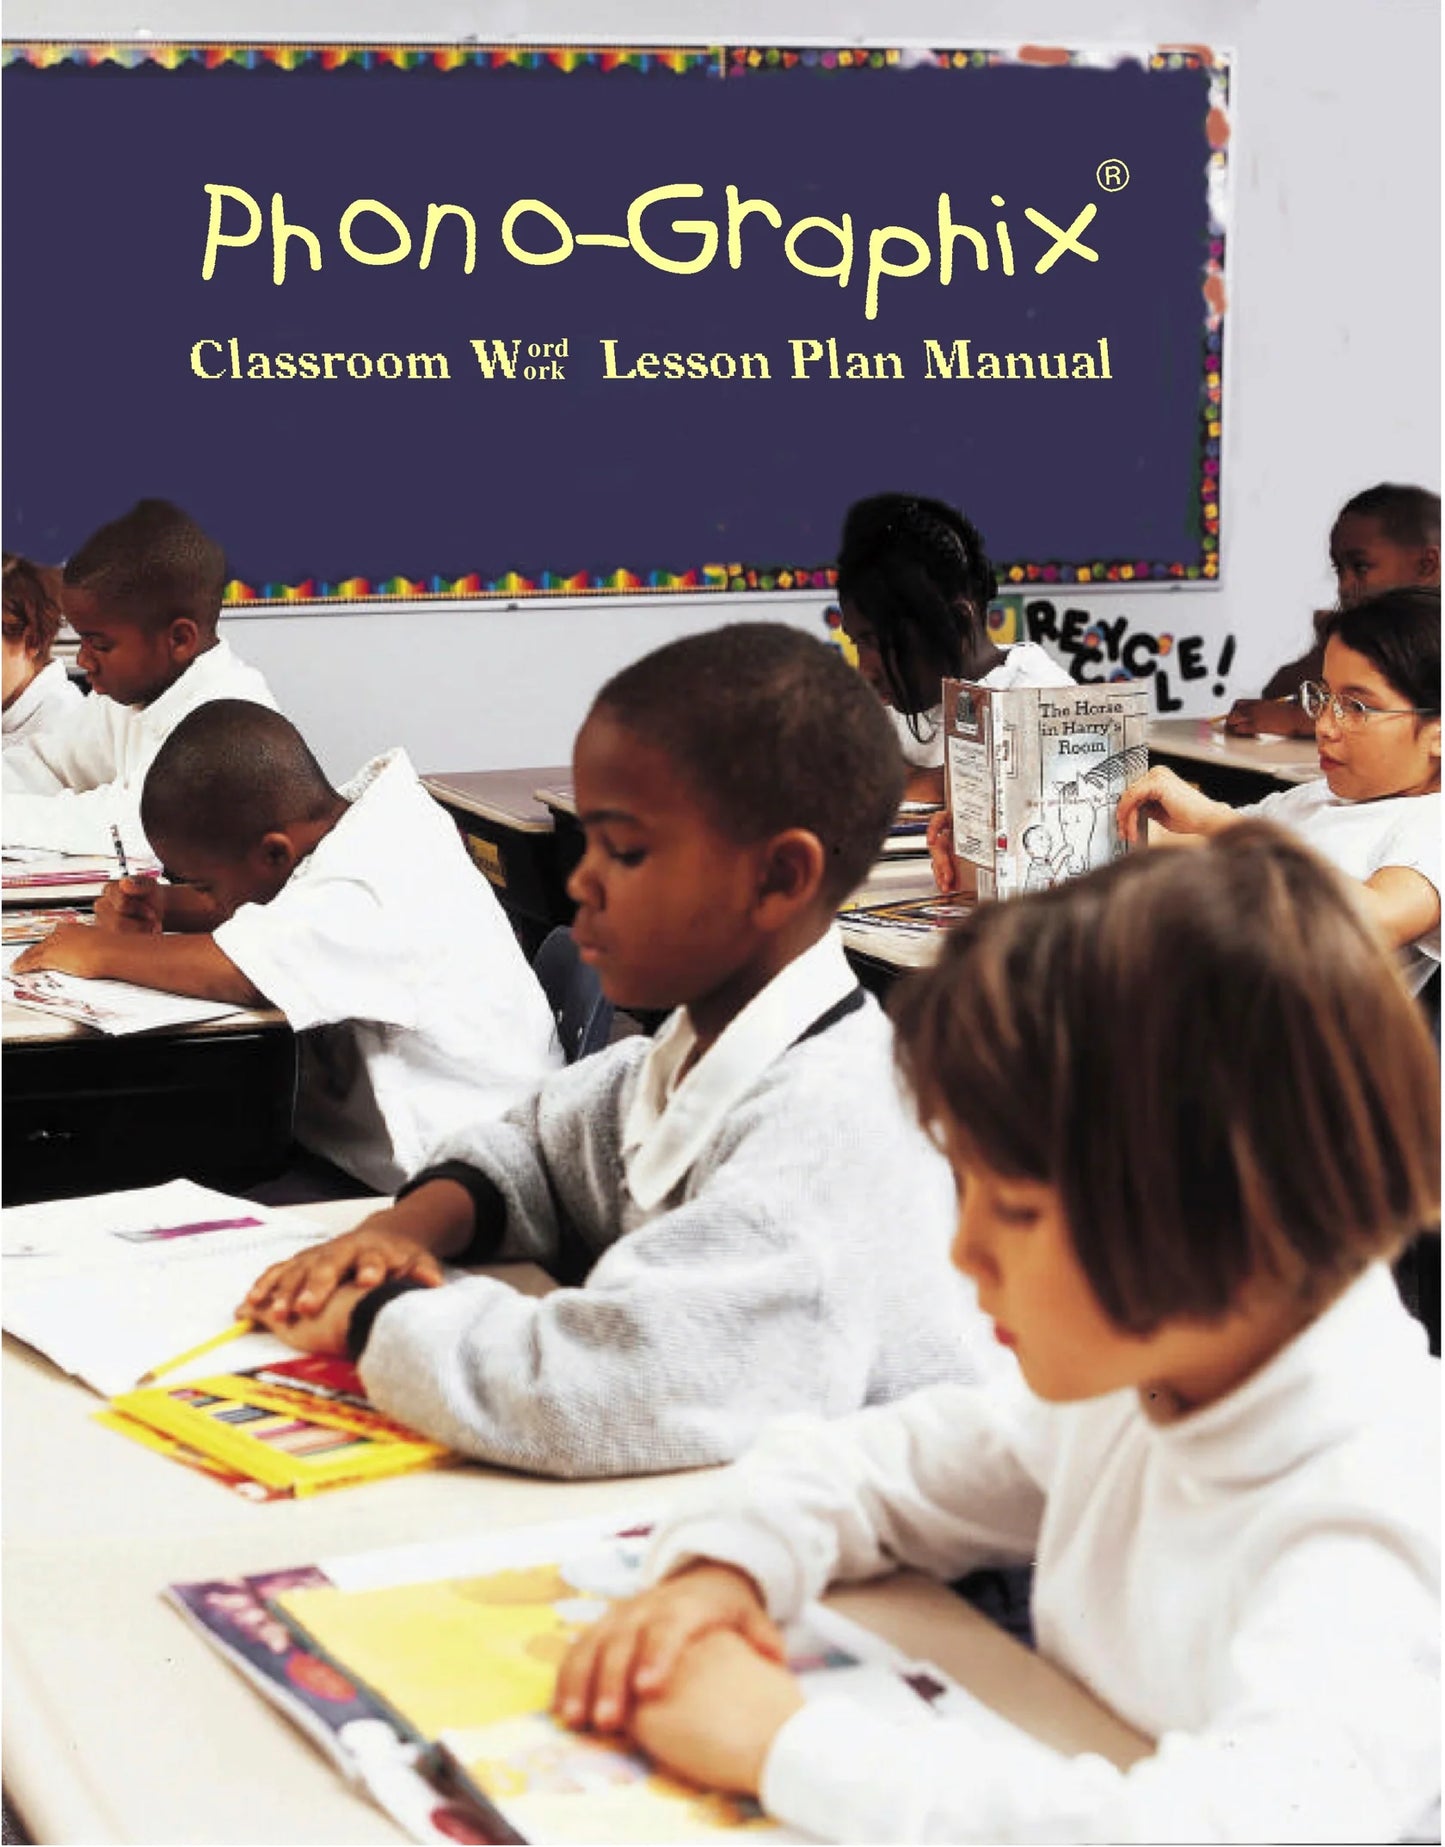 Phono-Graphix Certification Kit